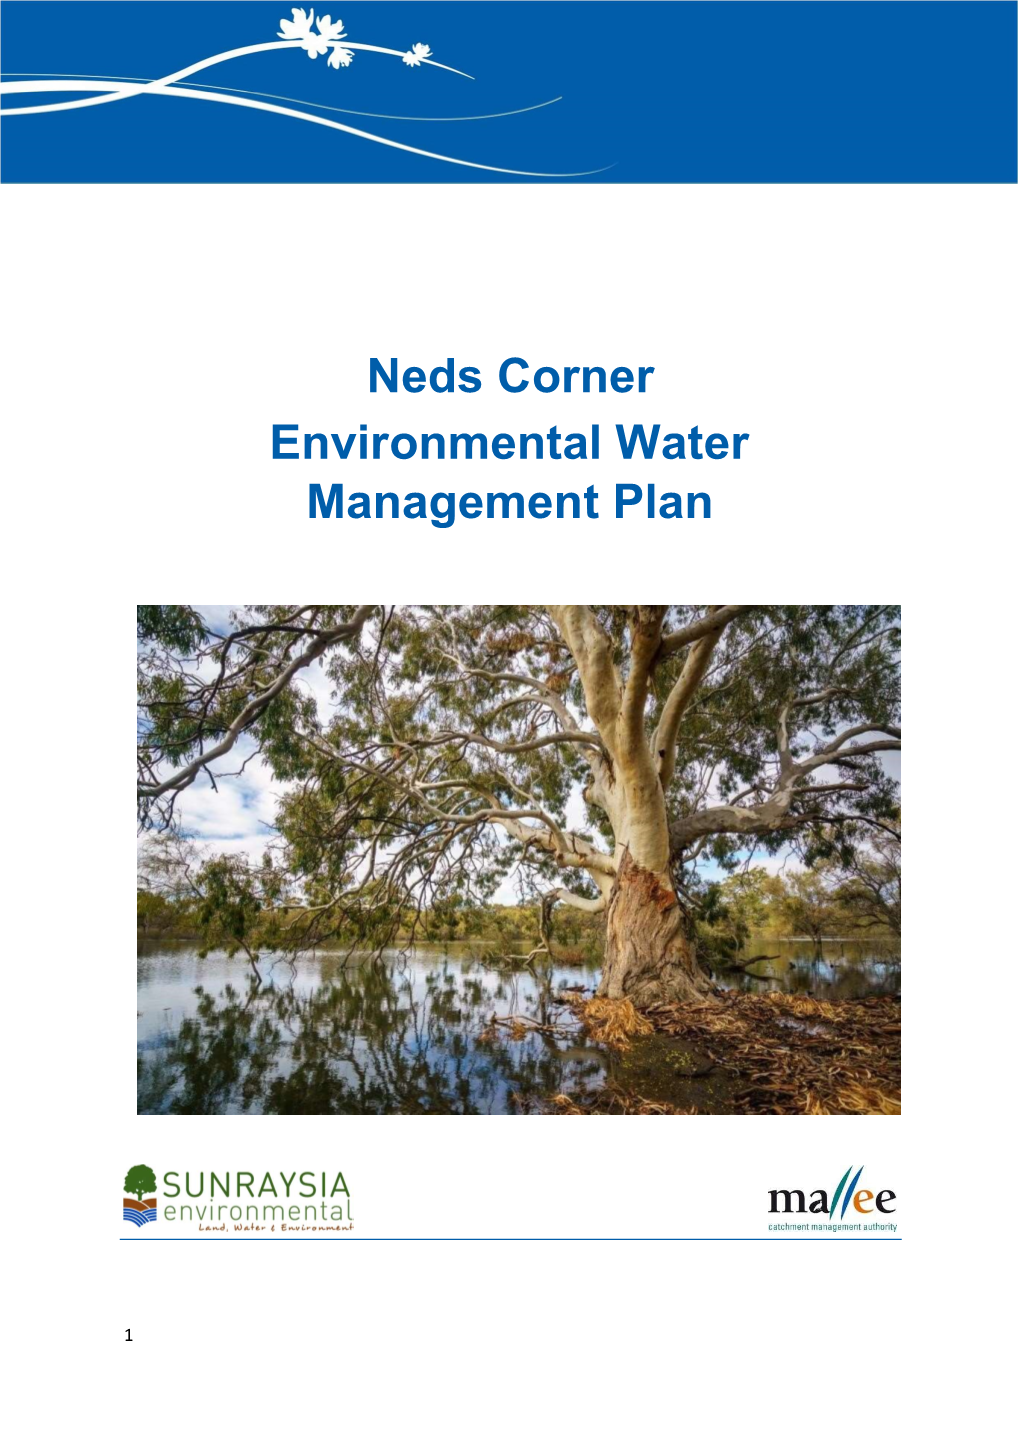 Neds Corner Environmental Water Management Plan